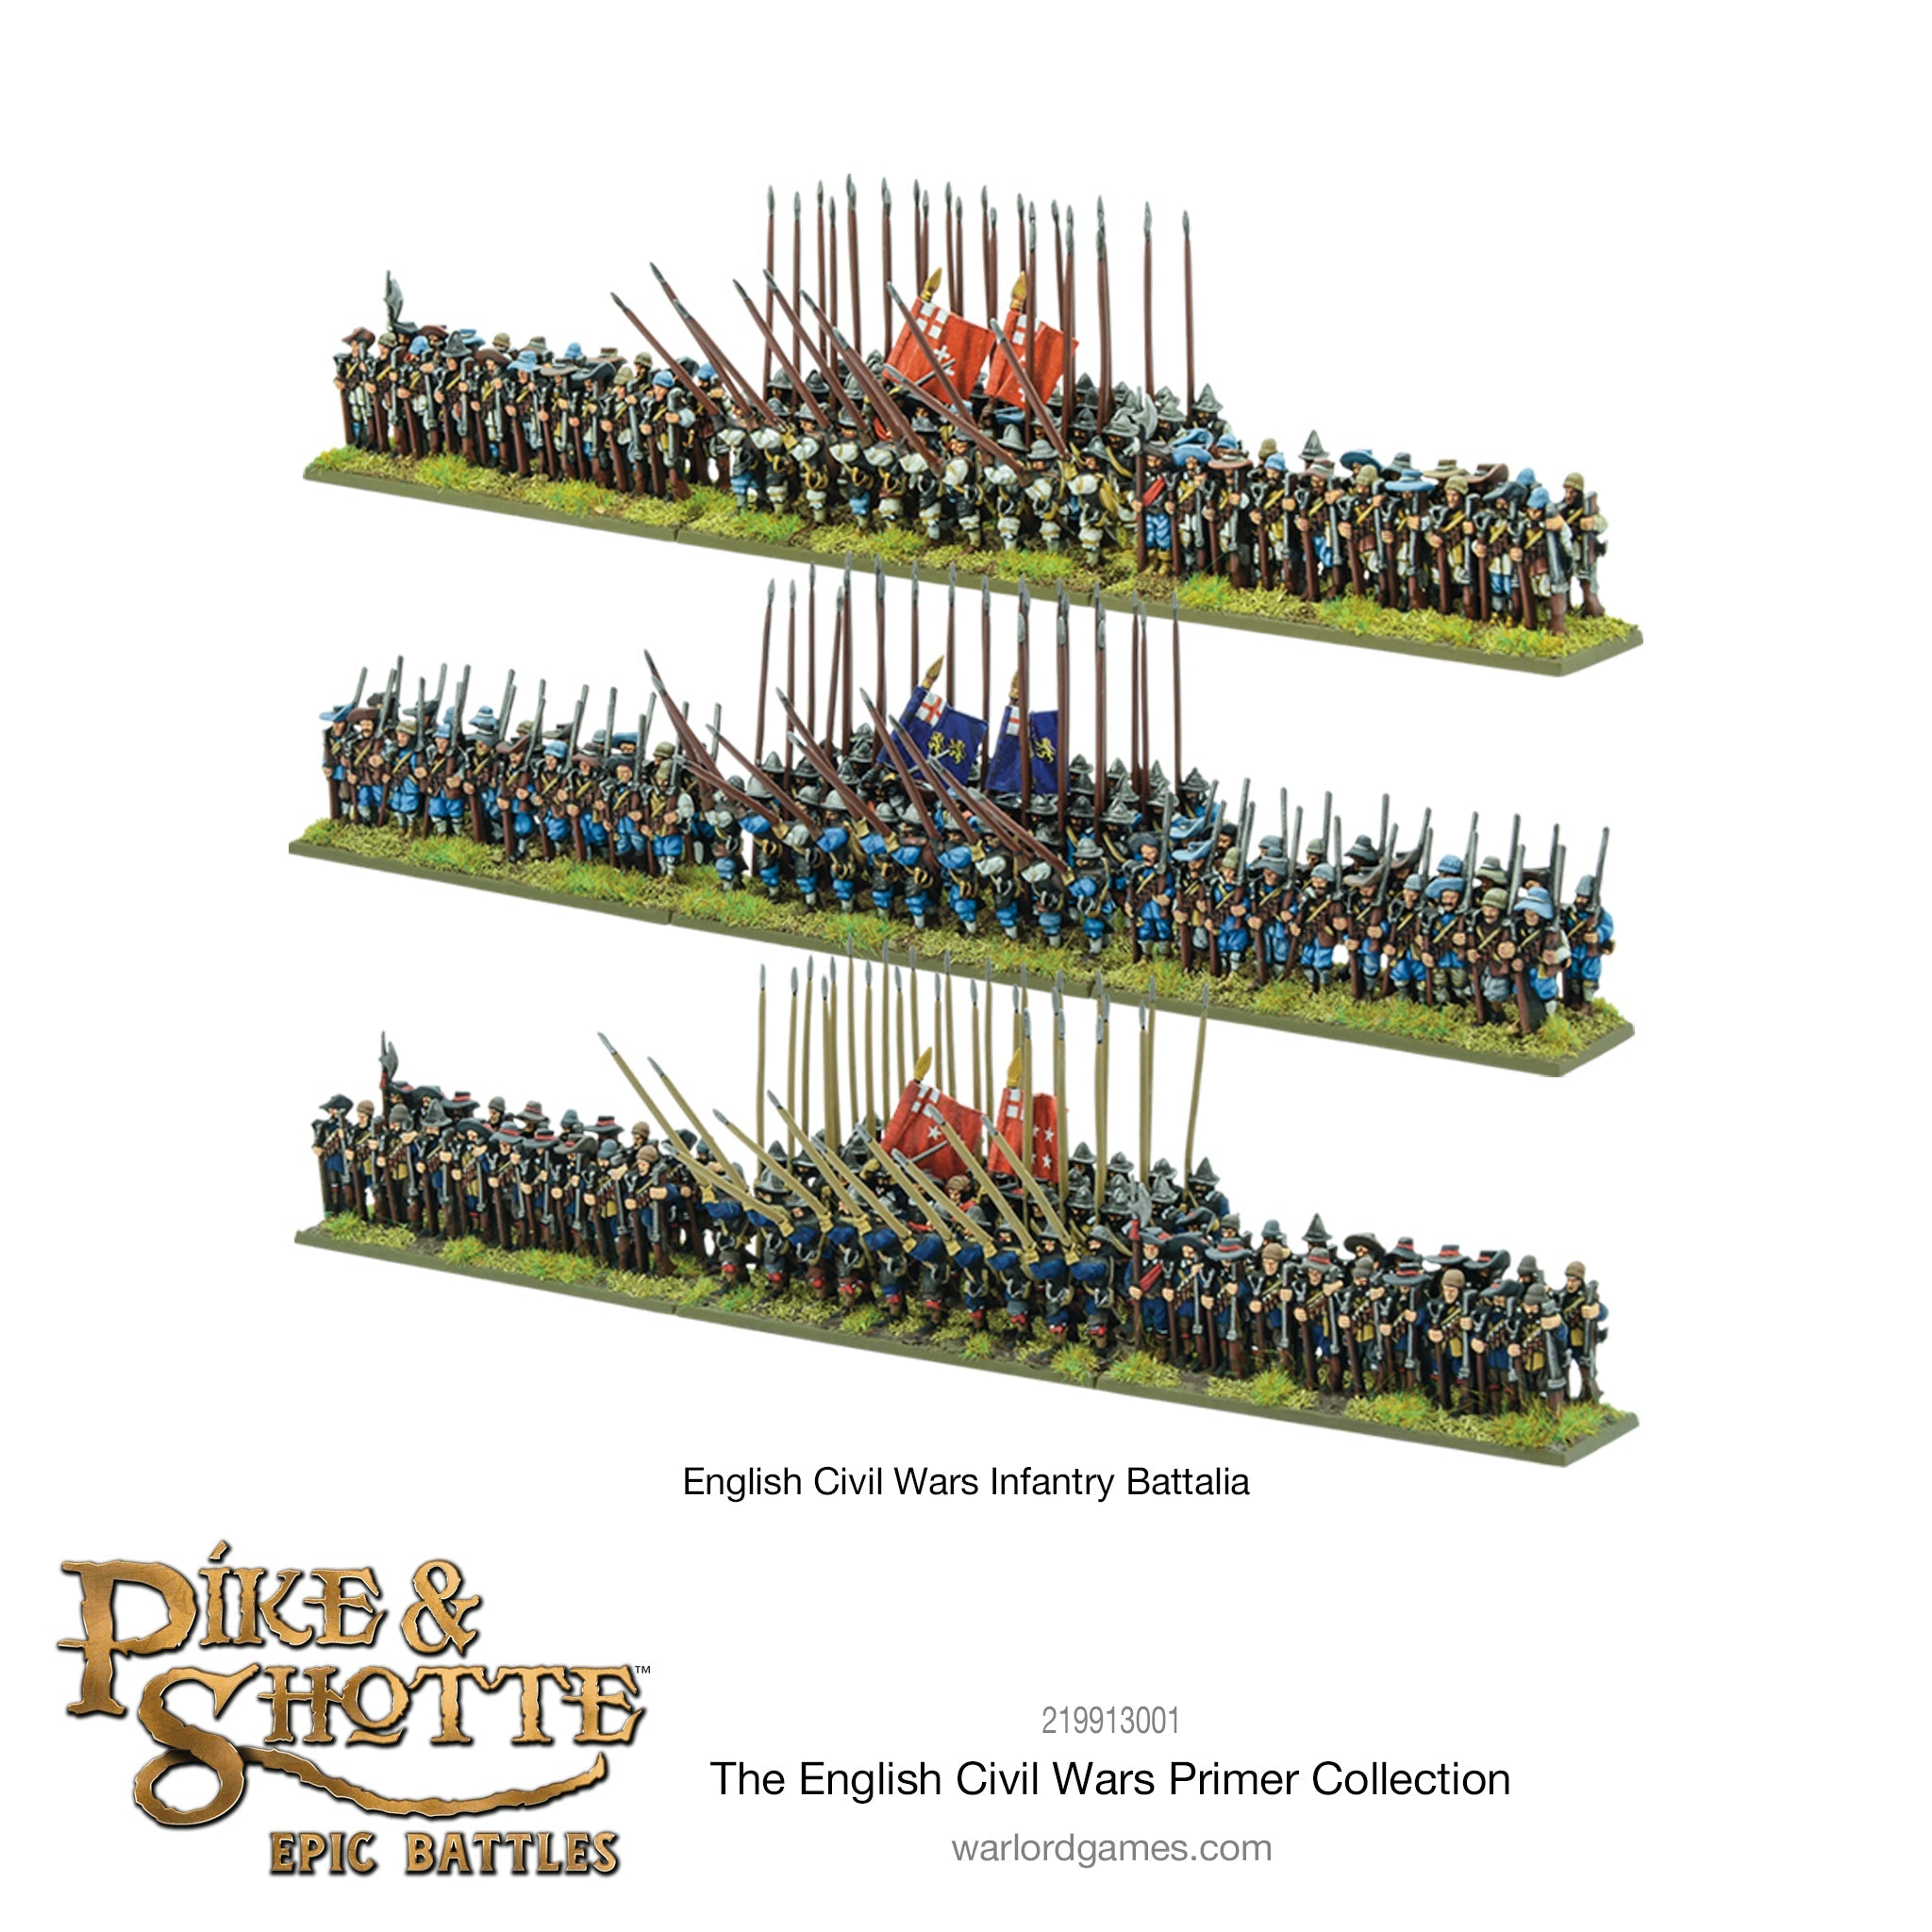 Pike & Shotte Epic Battles - English Civil Wars Primer Collection